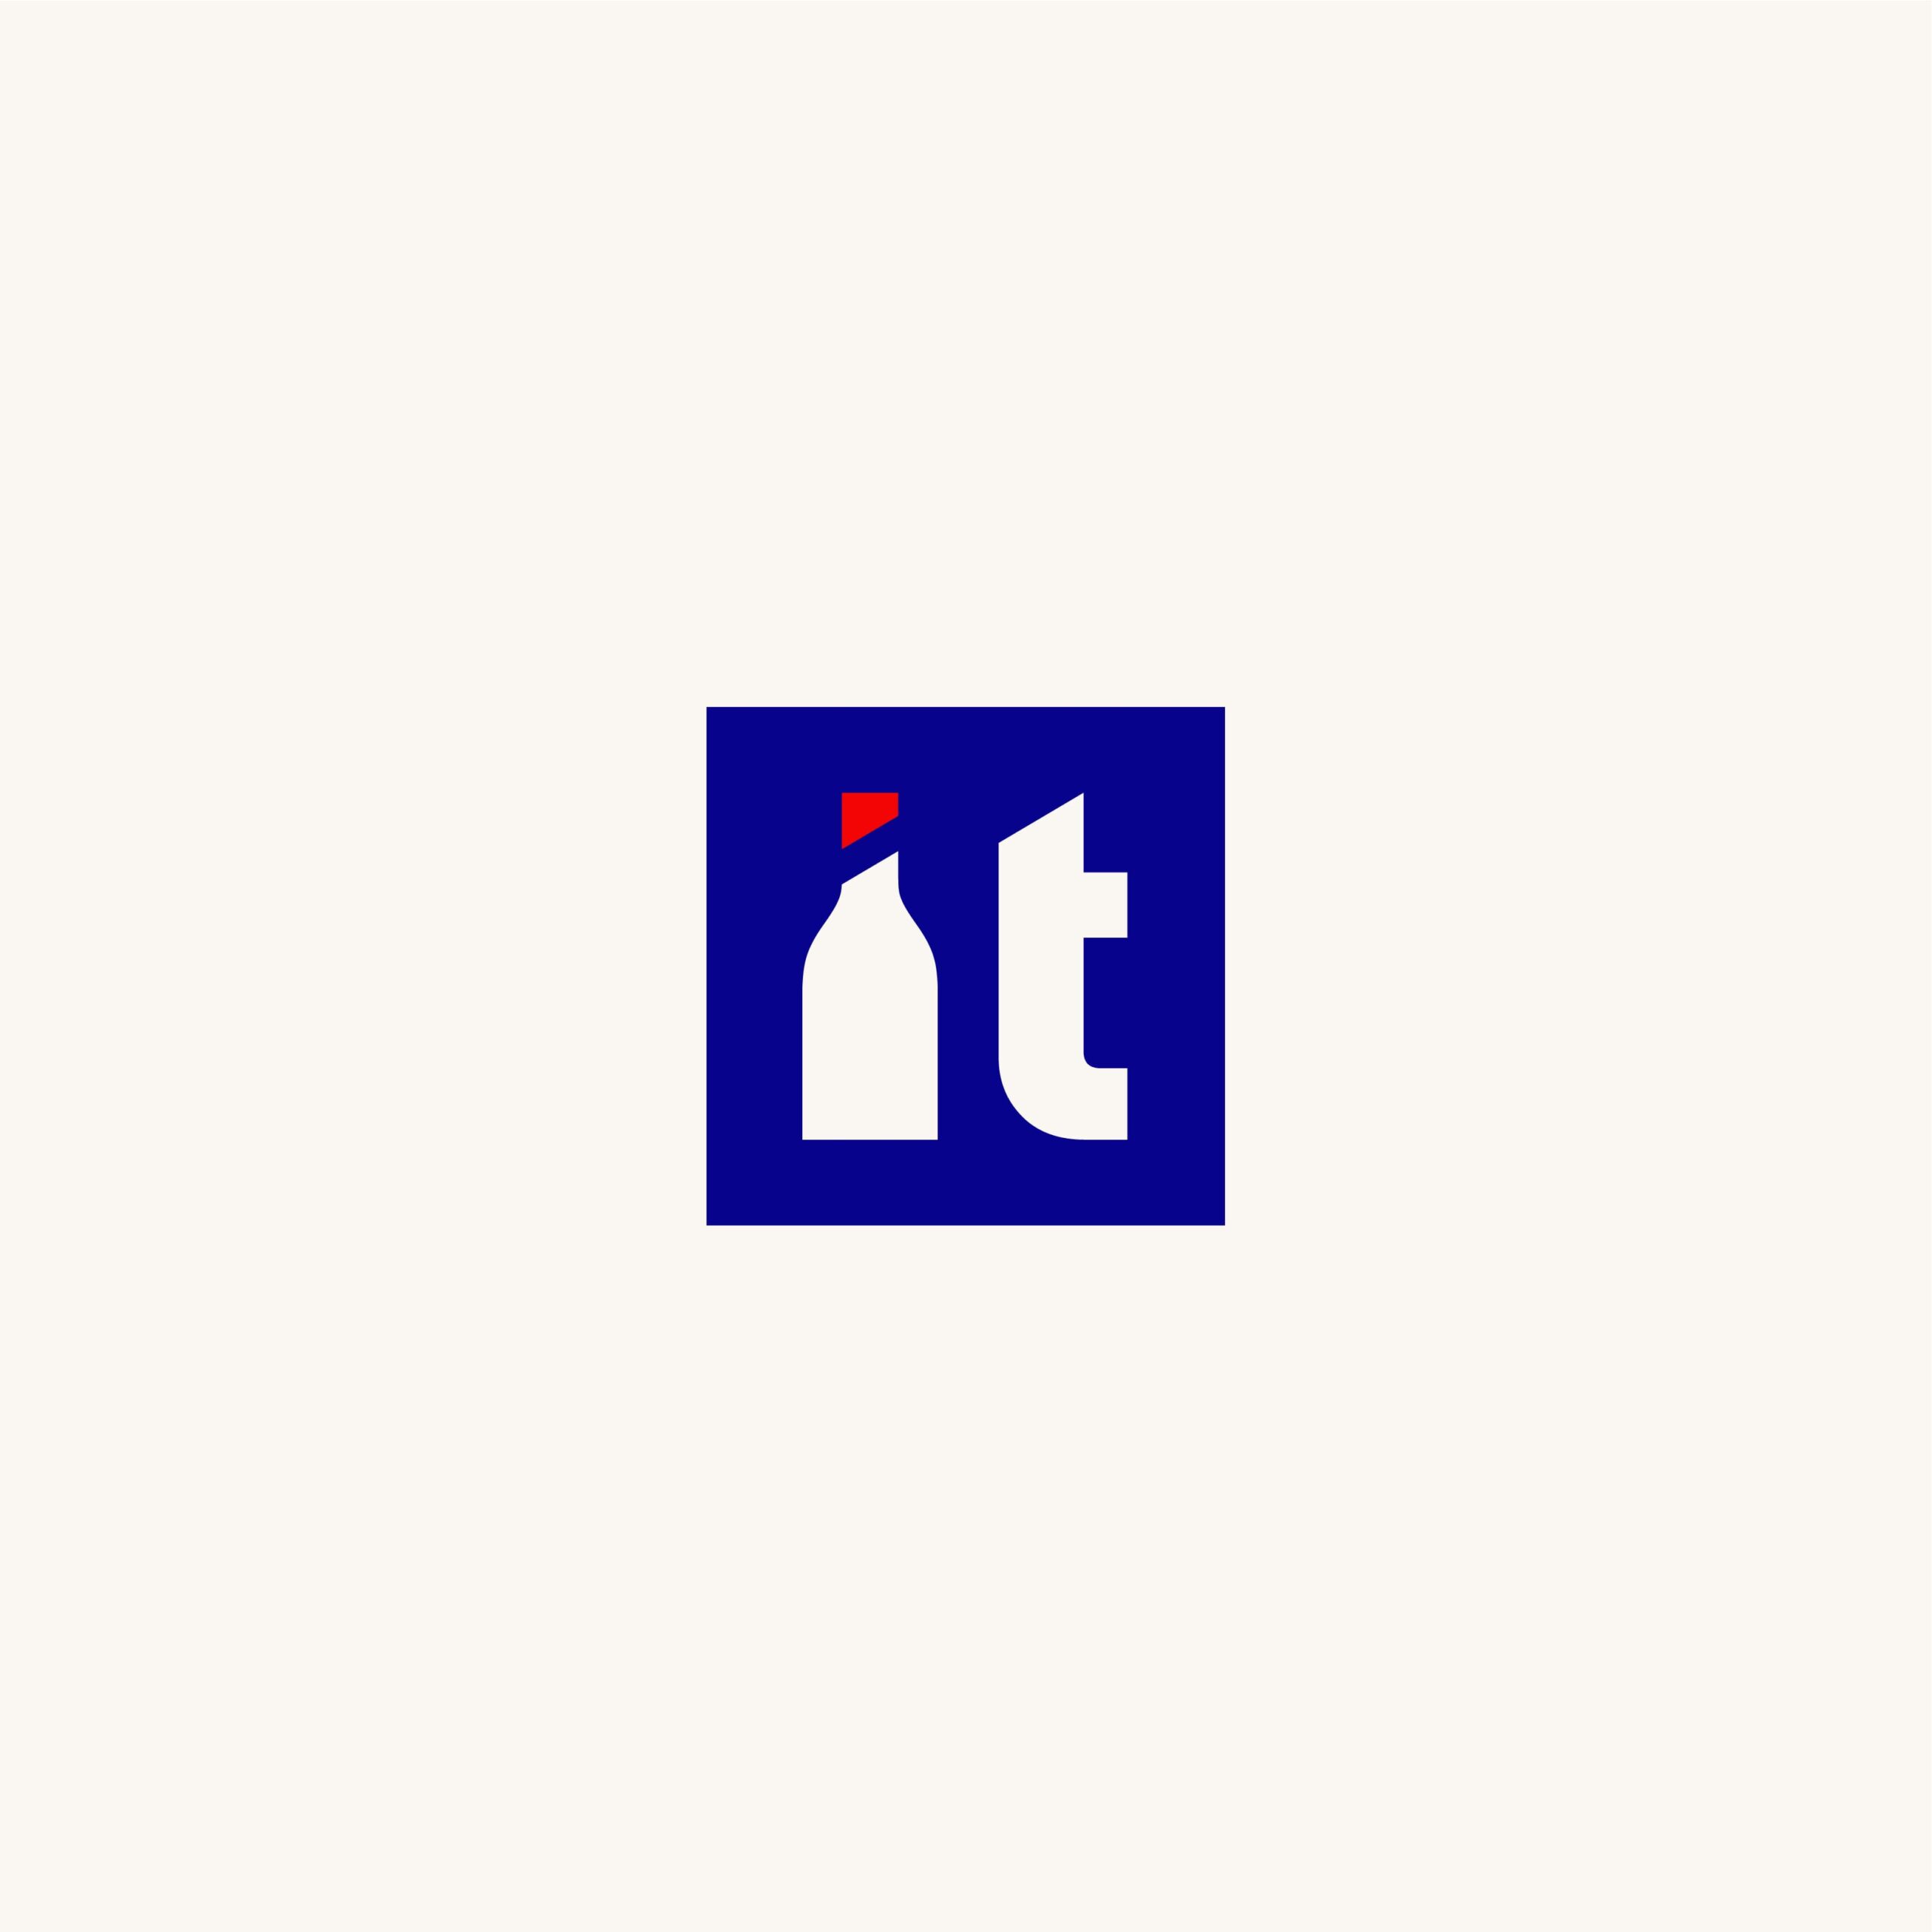 italializeme logo icon blue white inverted square@3x scaled - Bärenstark - Advertising Agency from Karlsruhe Mühlburg